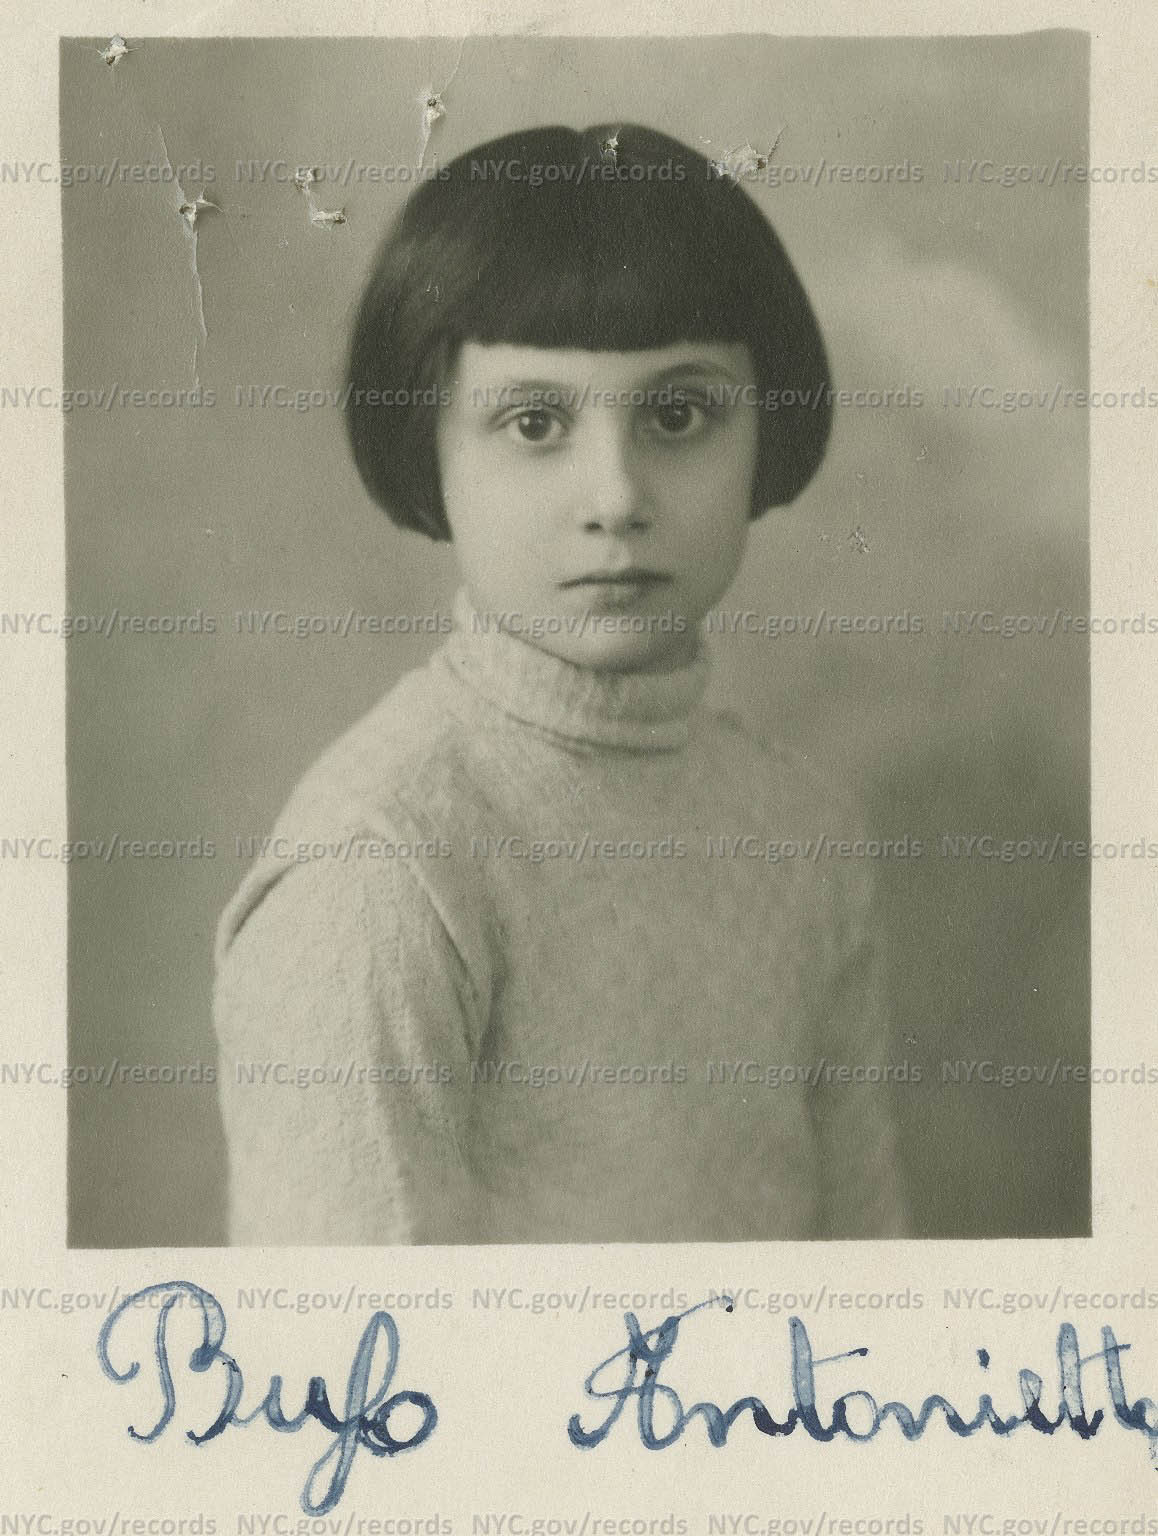 Antonietta Bufo, portrait of young girl with bangs.